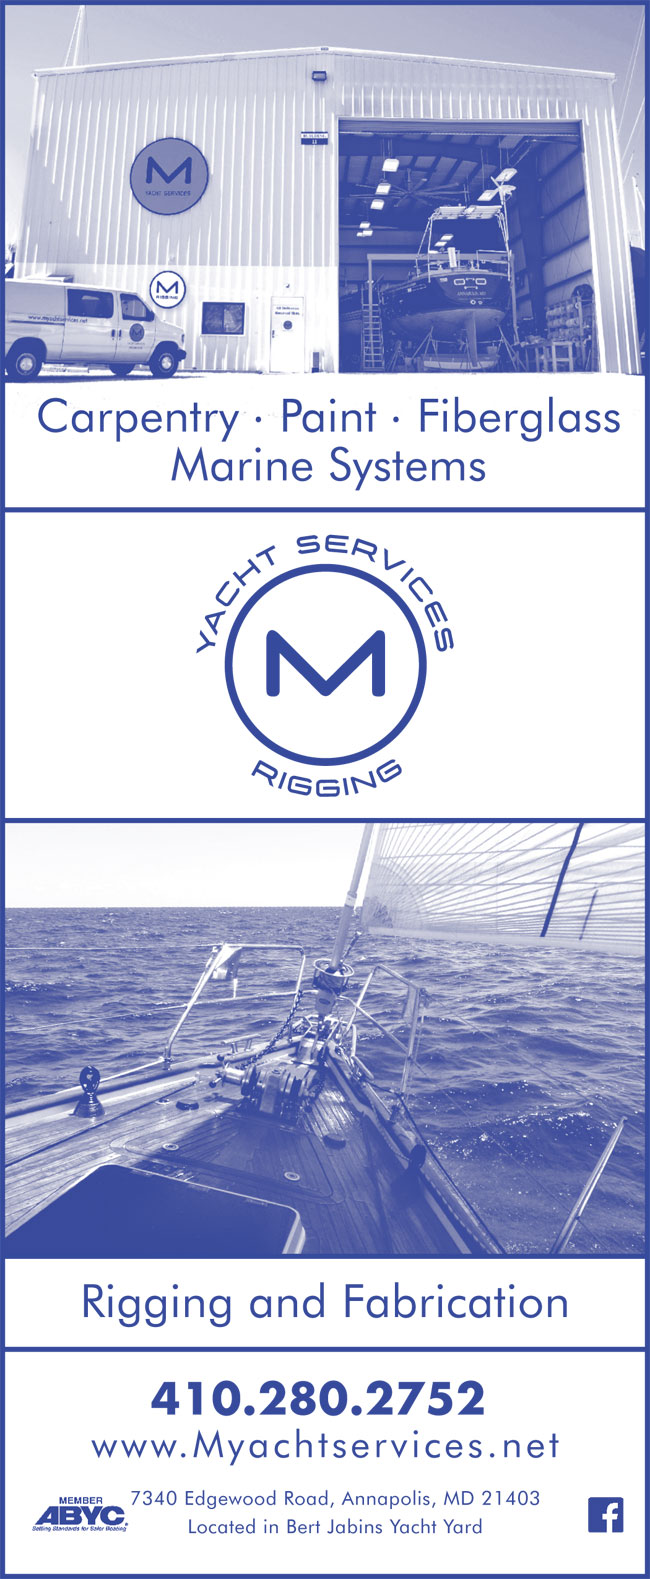 M Yacht Services